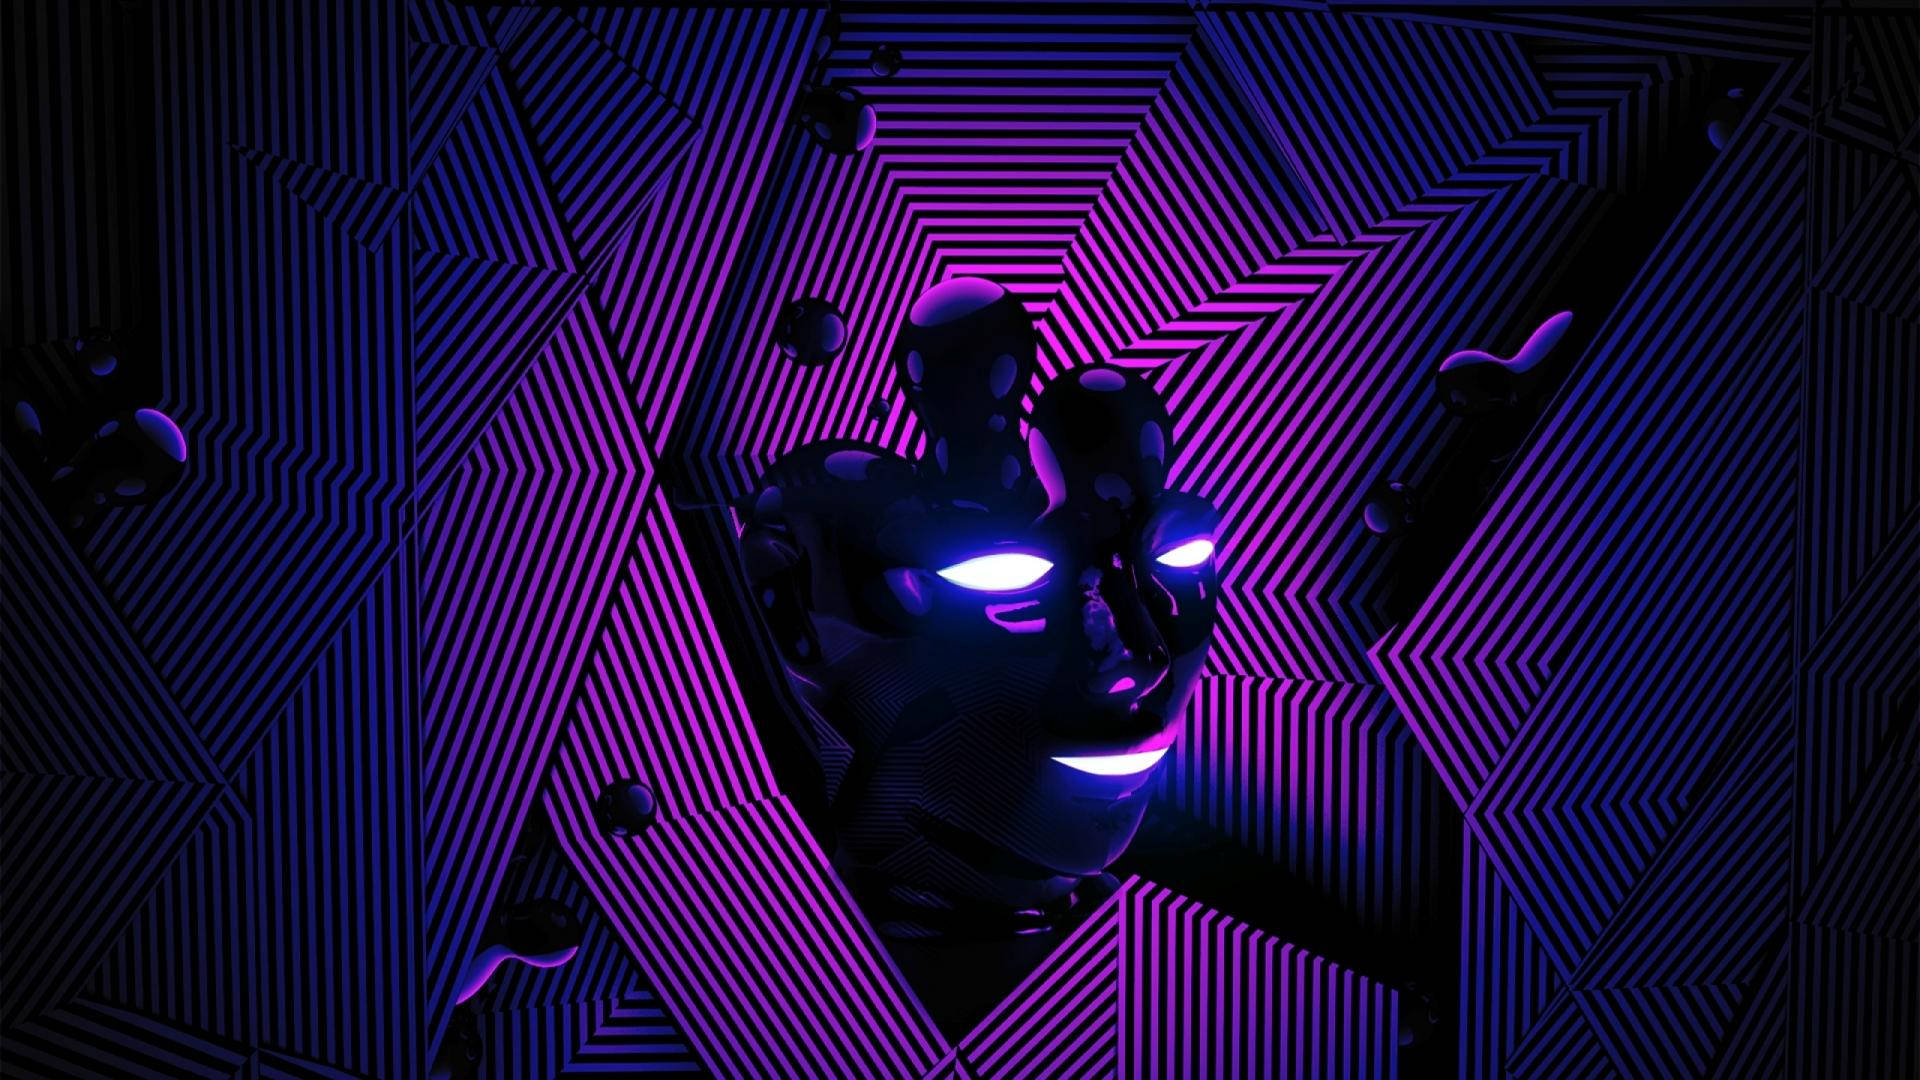 Cool purple-themed robot face Wallpaper